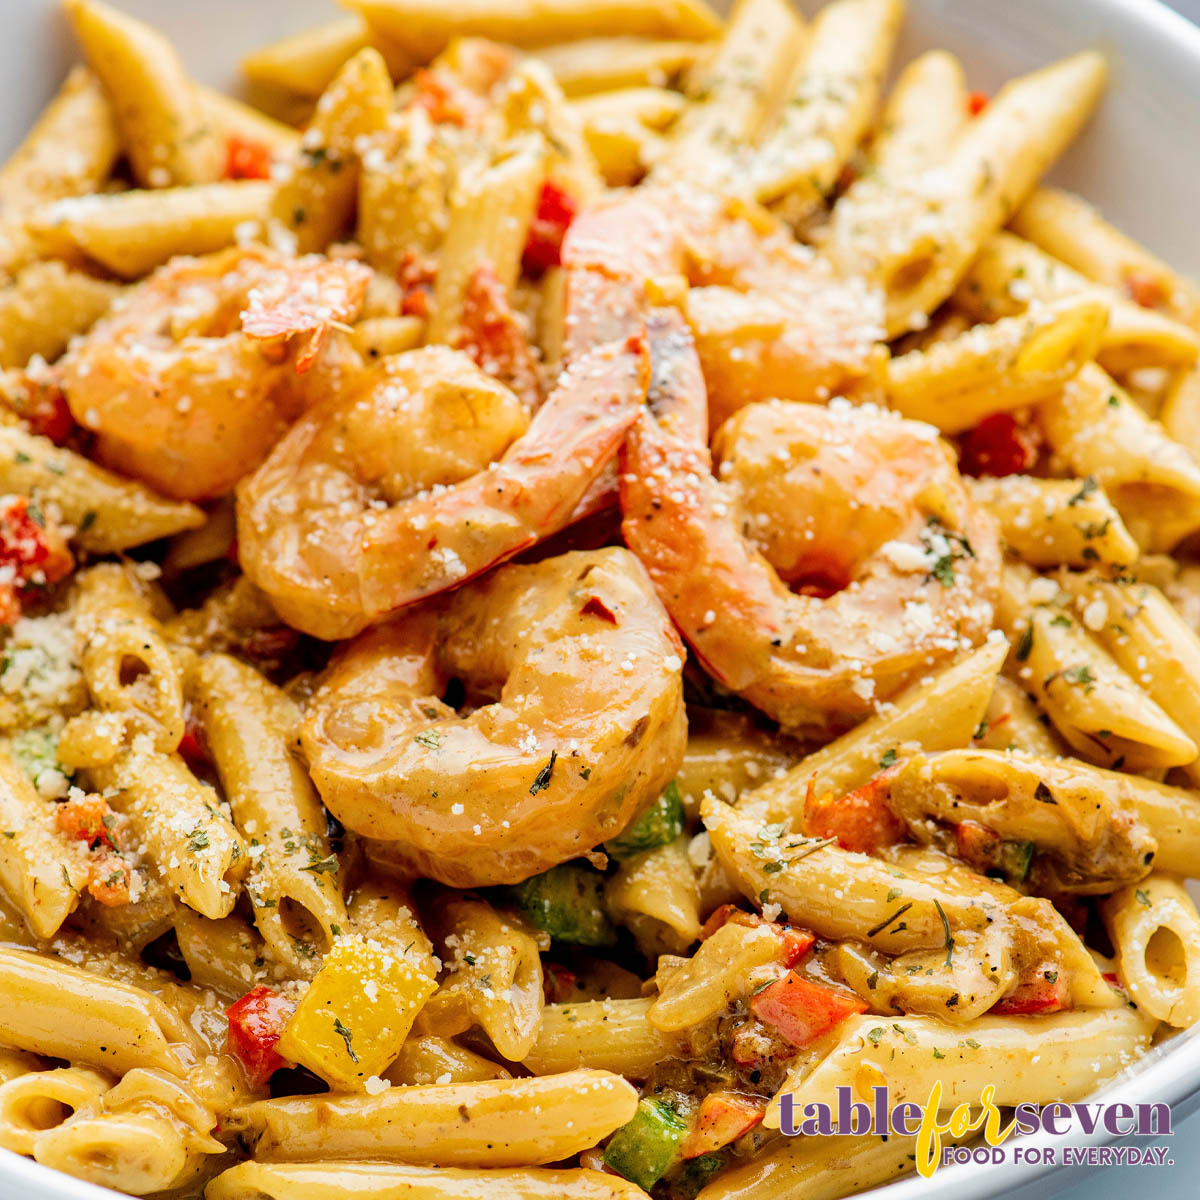 Shrimp chicken pasta close-up